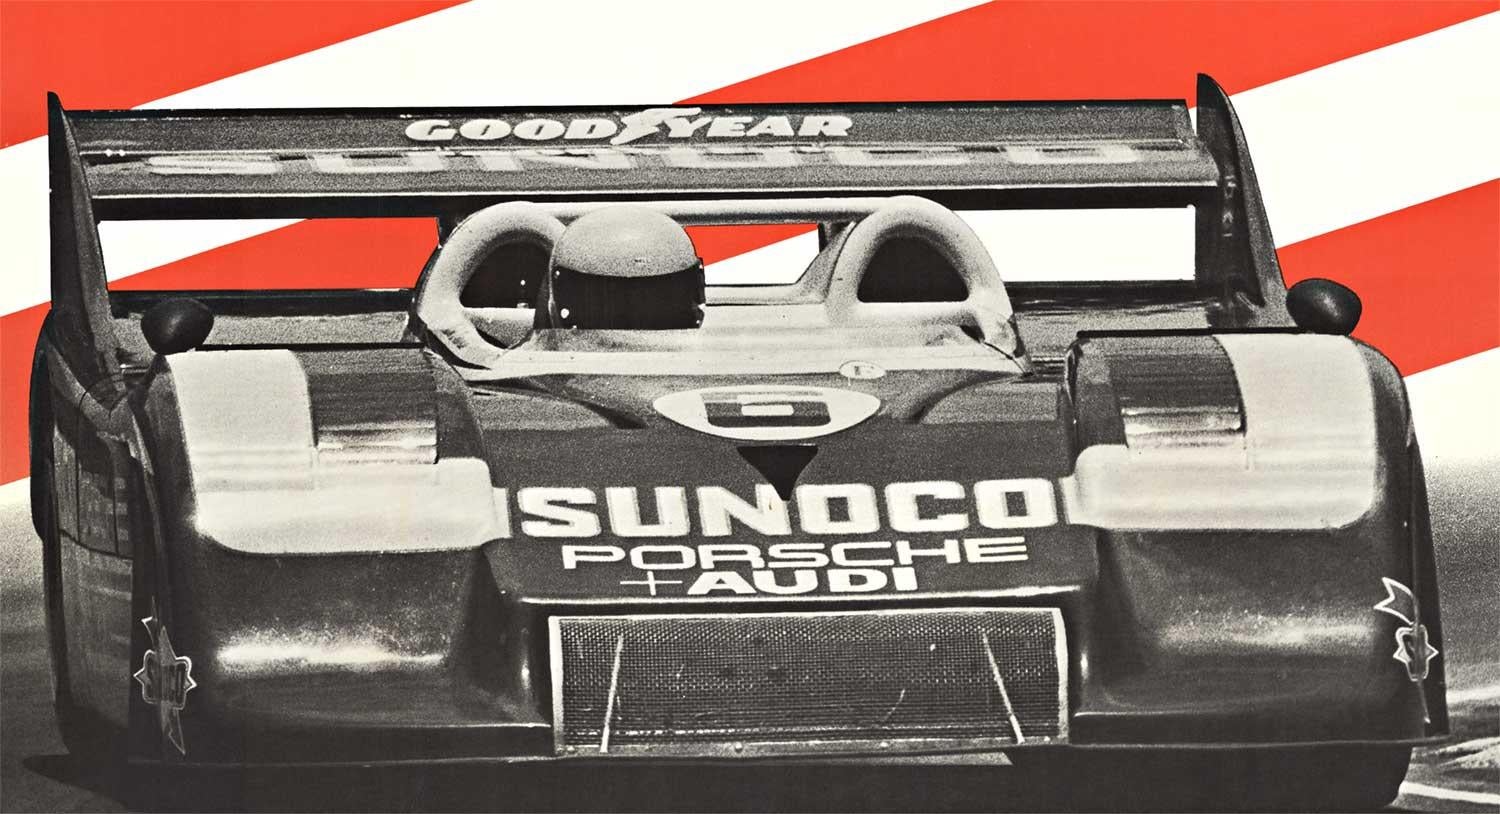 Original Porsche Wins Road America Can-Am vintage factory poster - Print by Erich Strenger